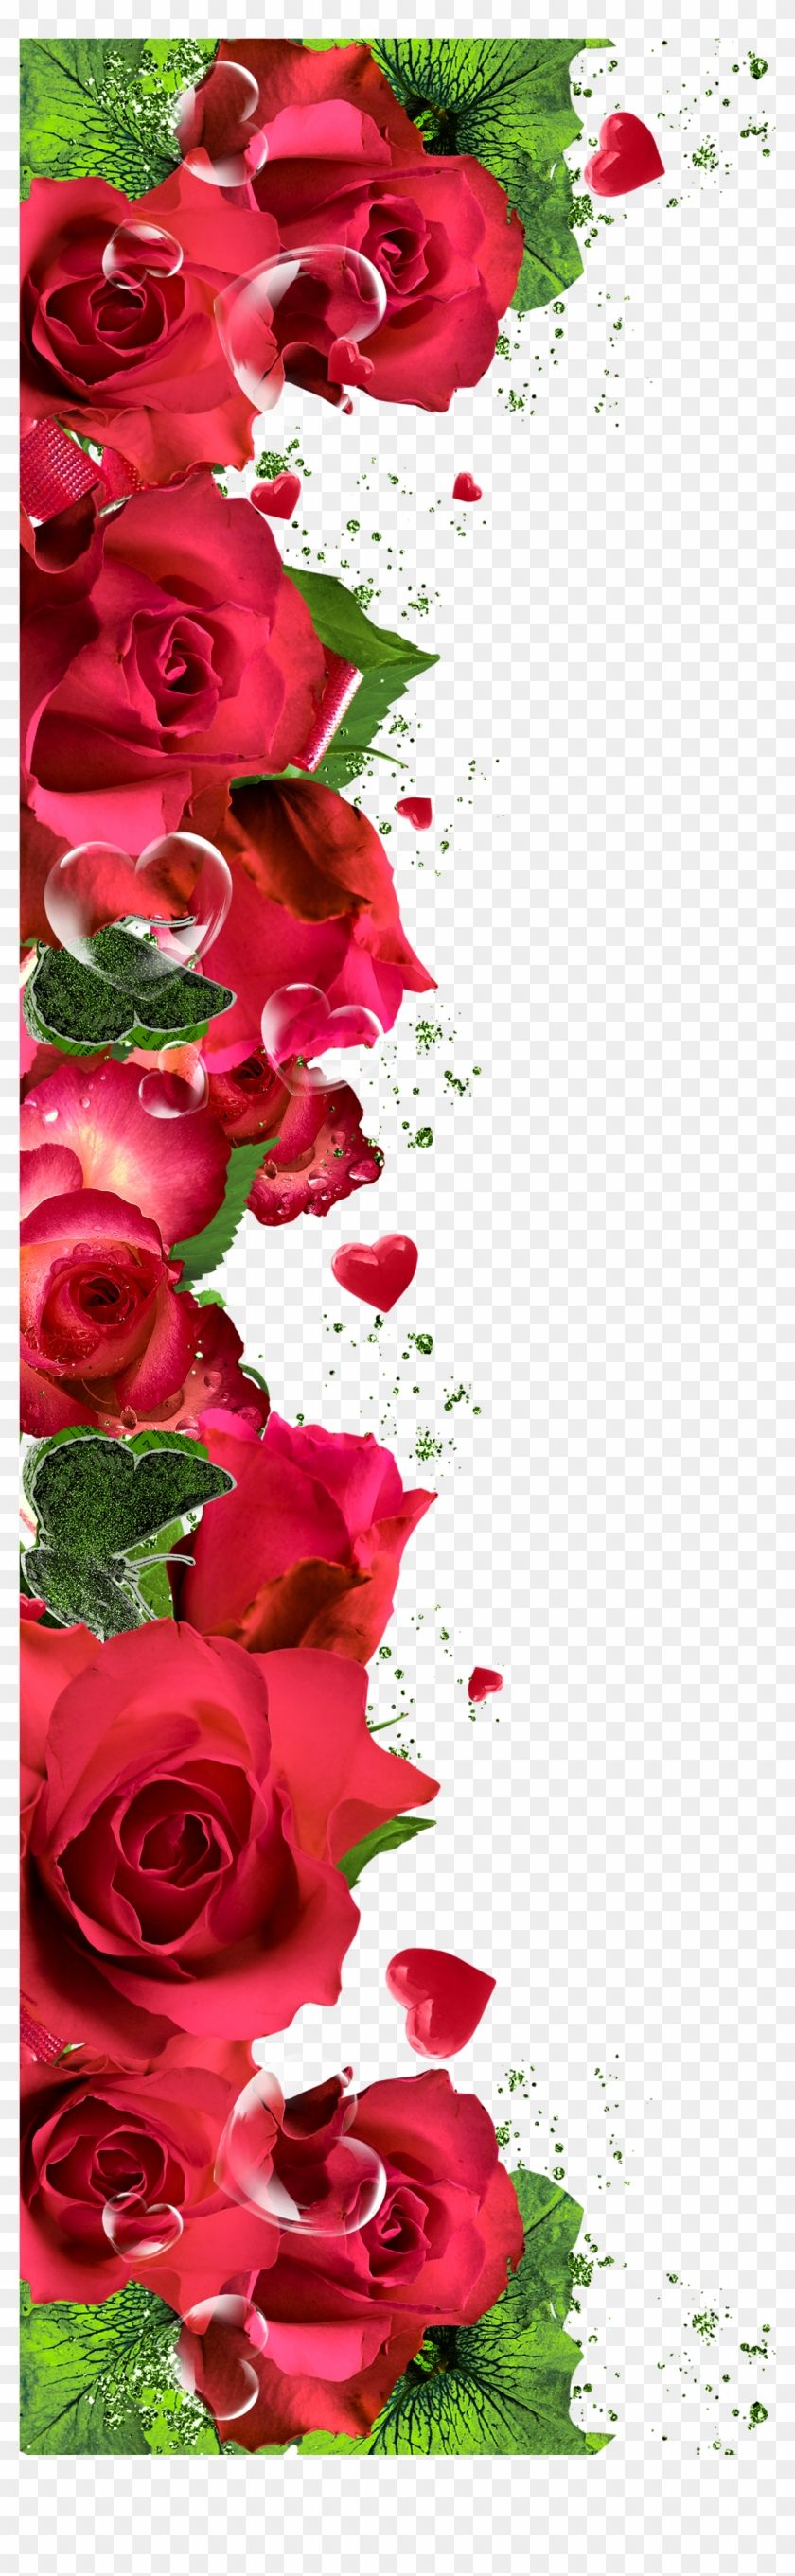 Wallpaper Patterns, Wallpaper Background, iPhone Wallpaper, Flower Border Png Transparent PNG Clipart Image Download